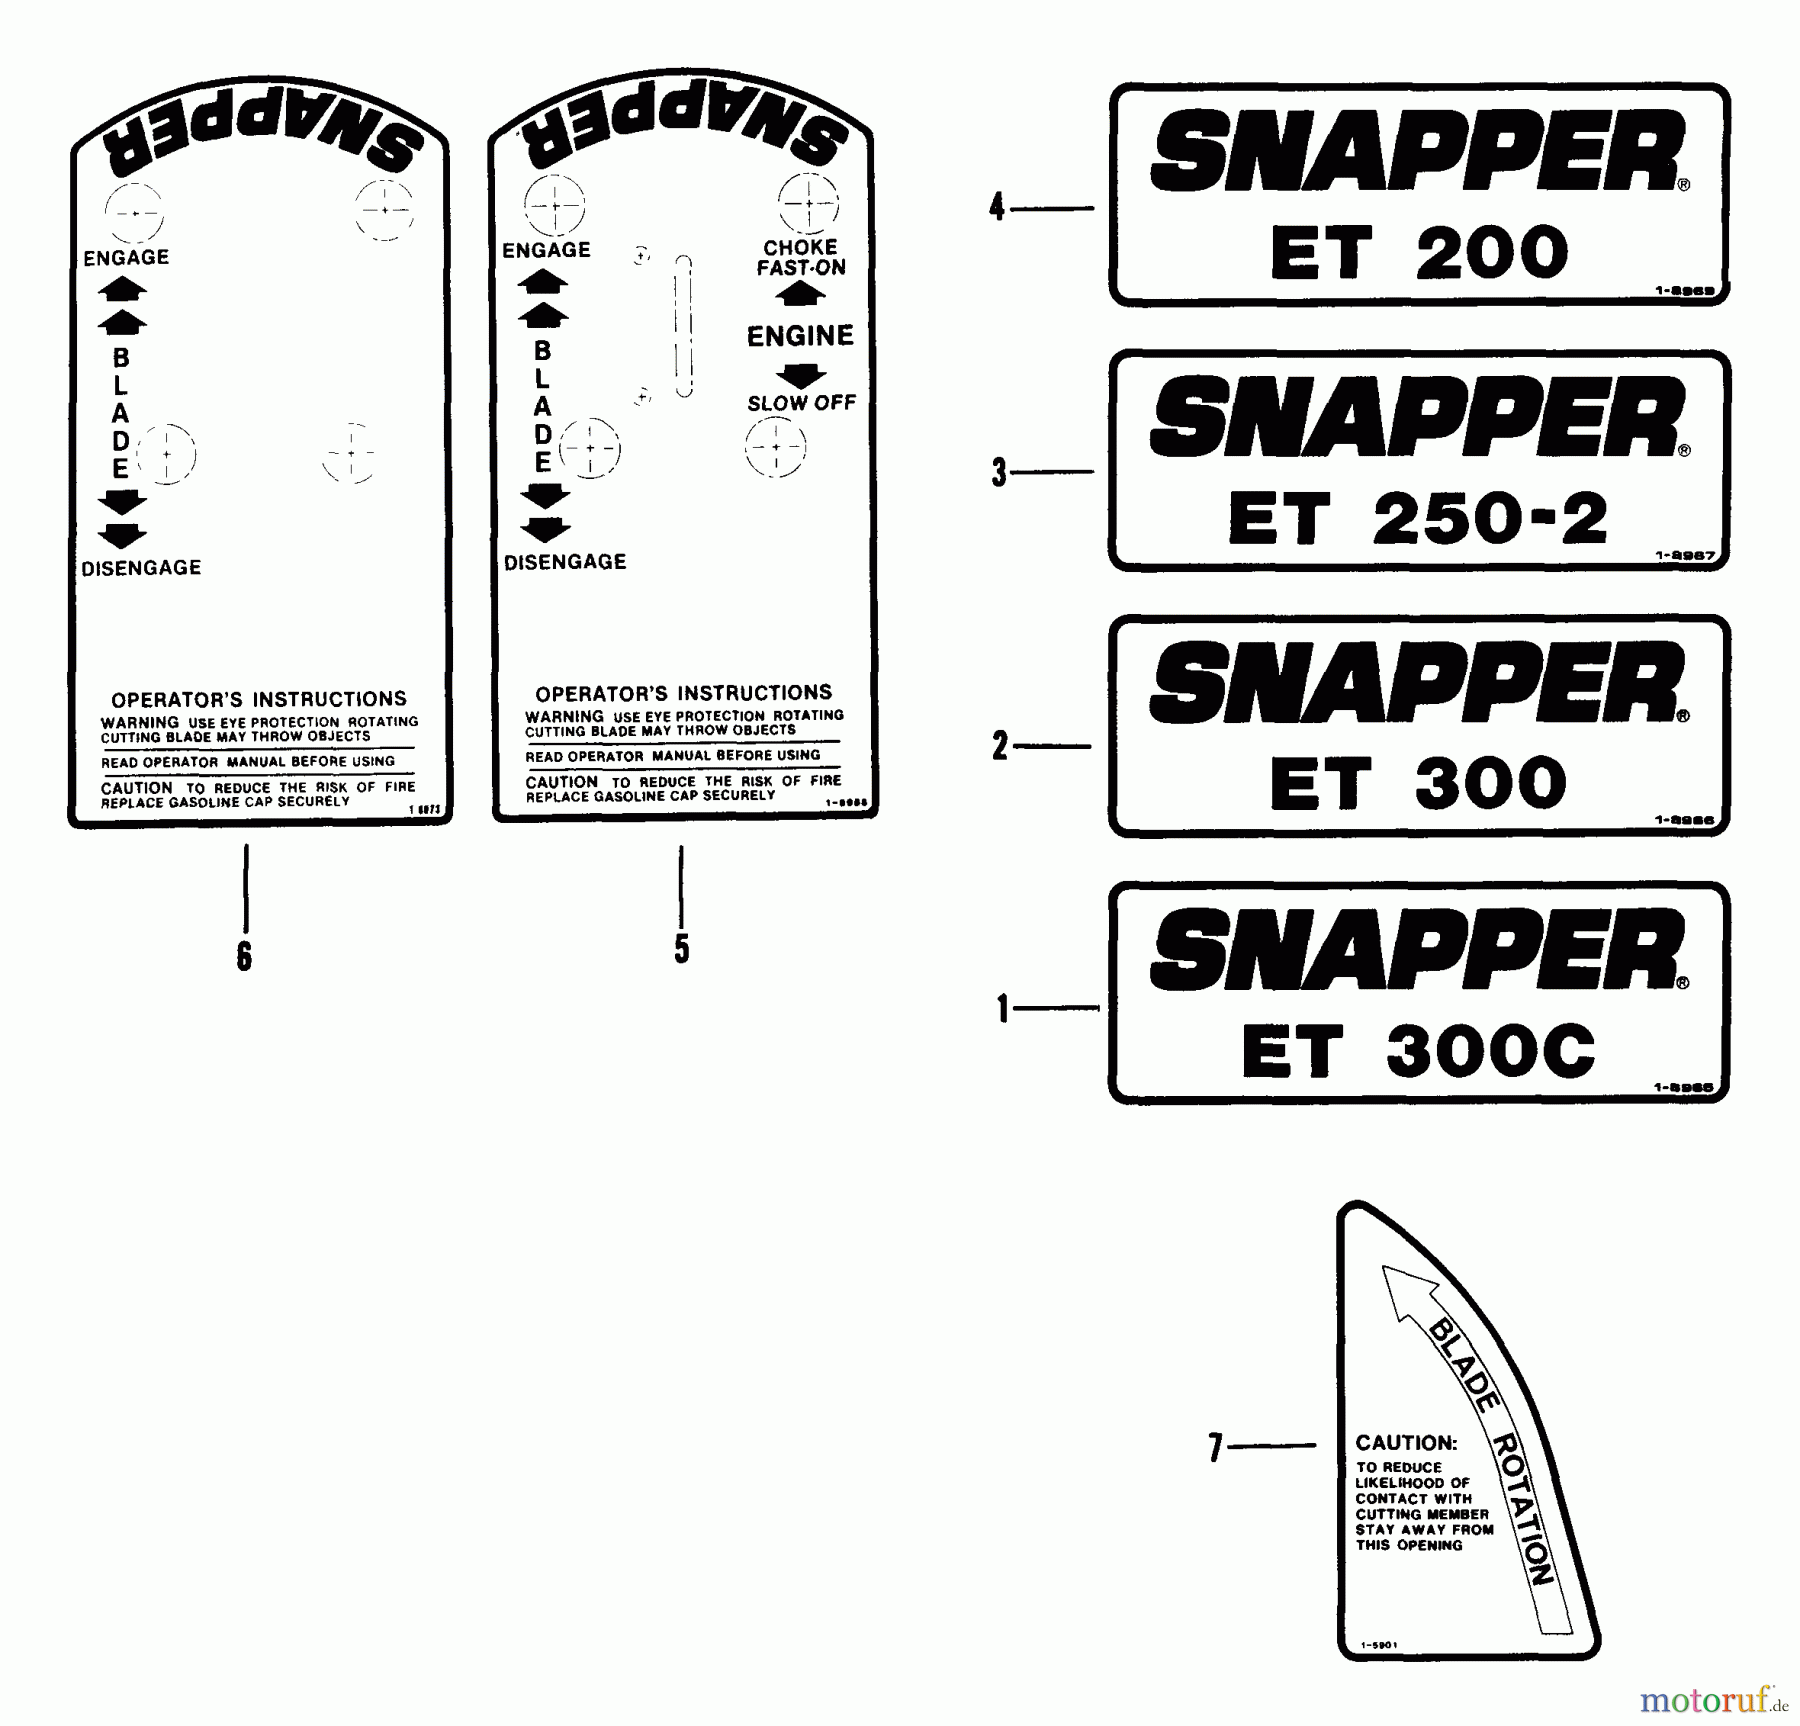  Snapper Kantenschneider ET300C - Snapper Commercial Edger Trimmer, 3 HP, Series 0 Decals